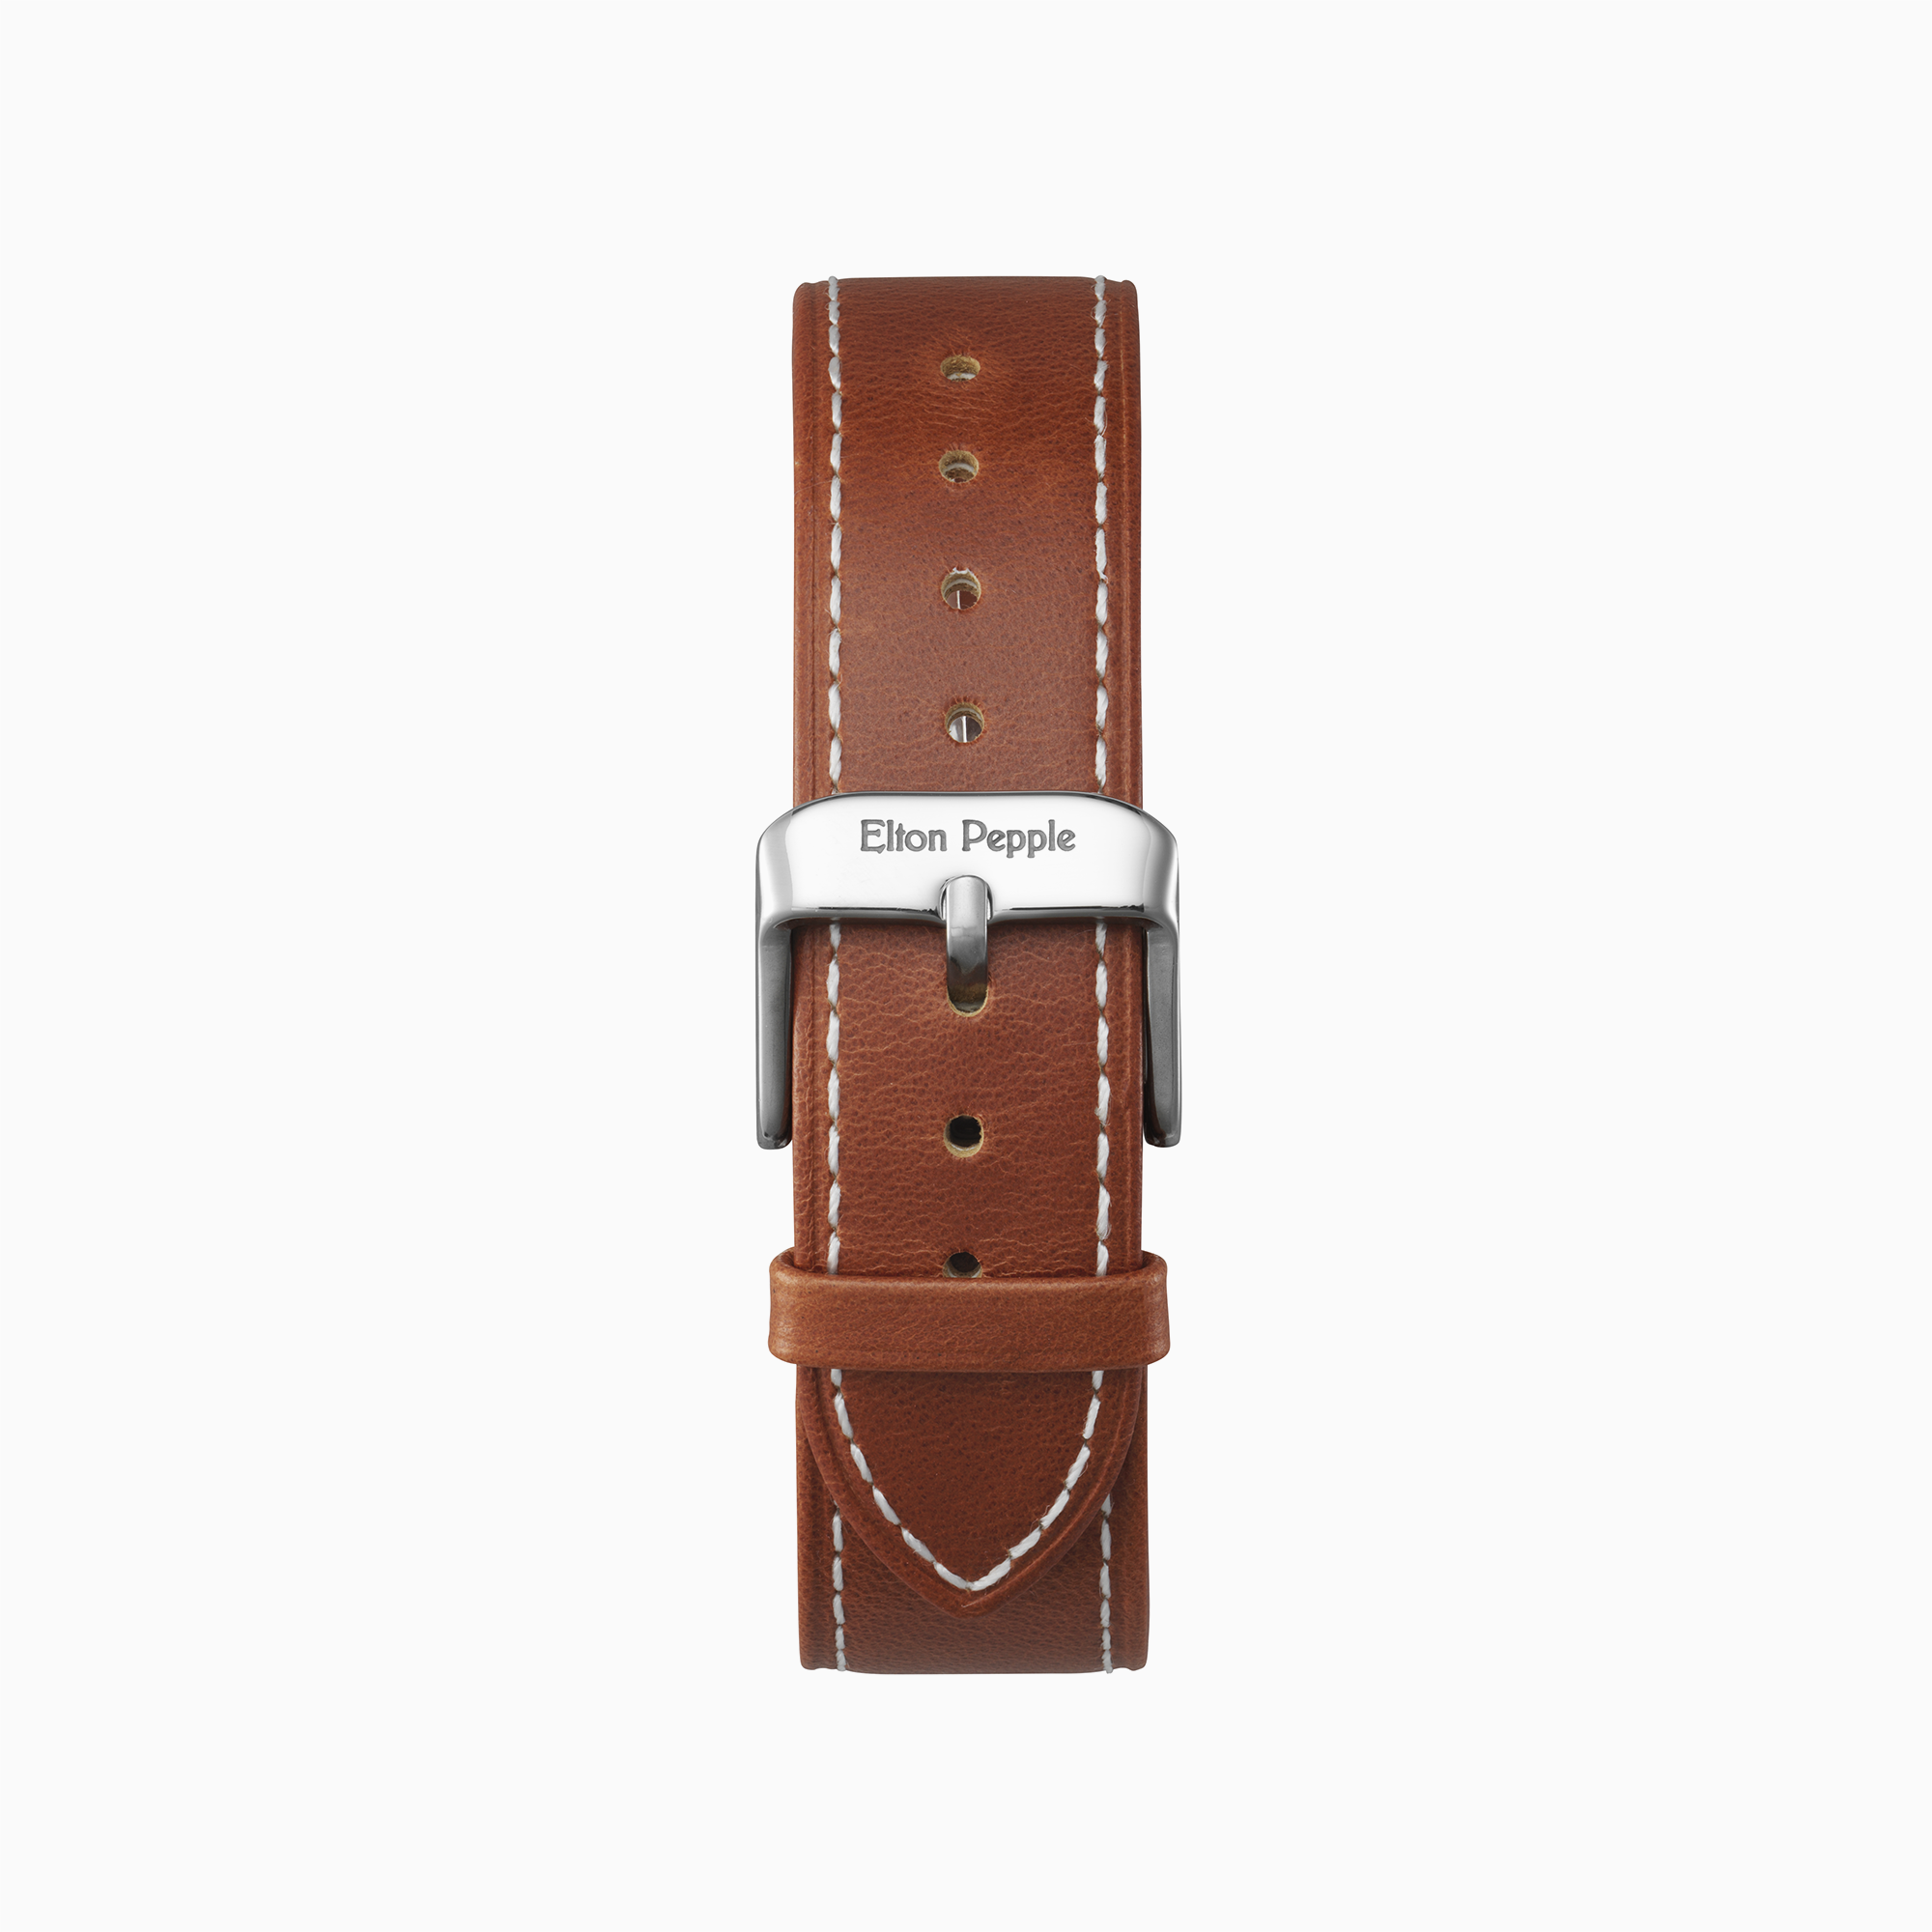 Edgewater Stitch - Silver leather strap